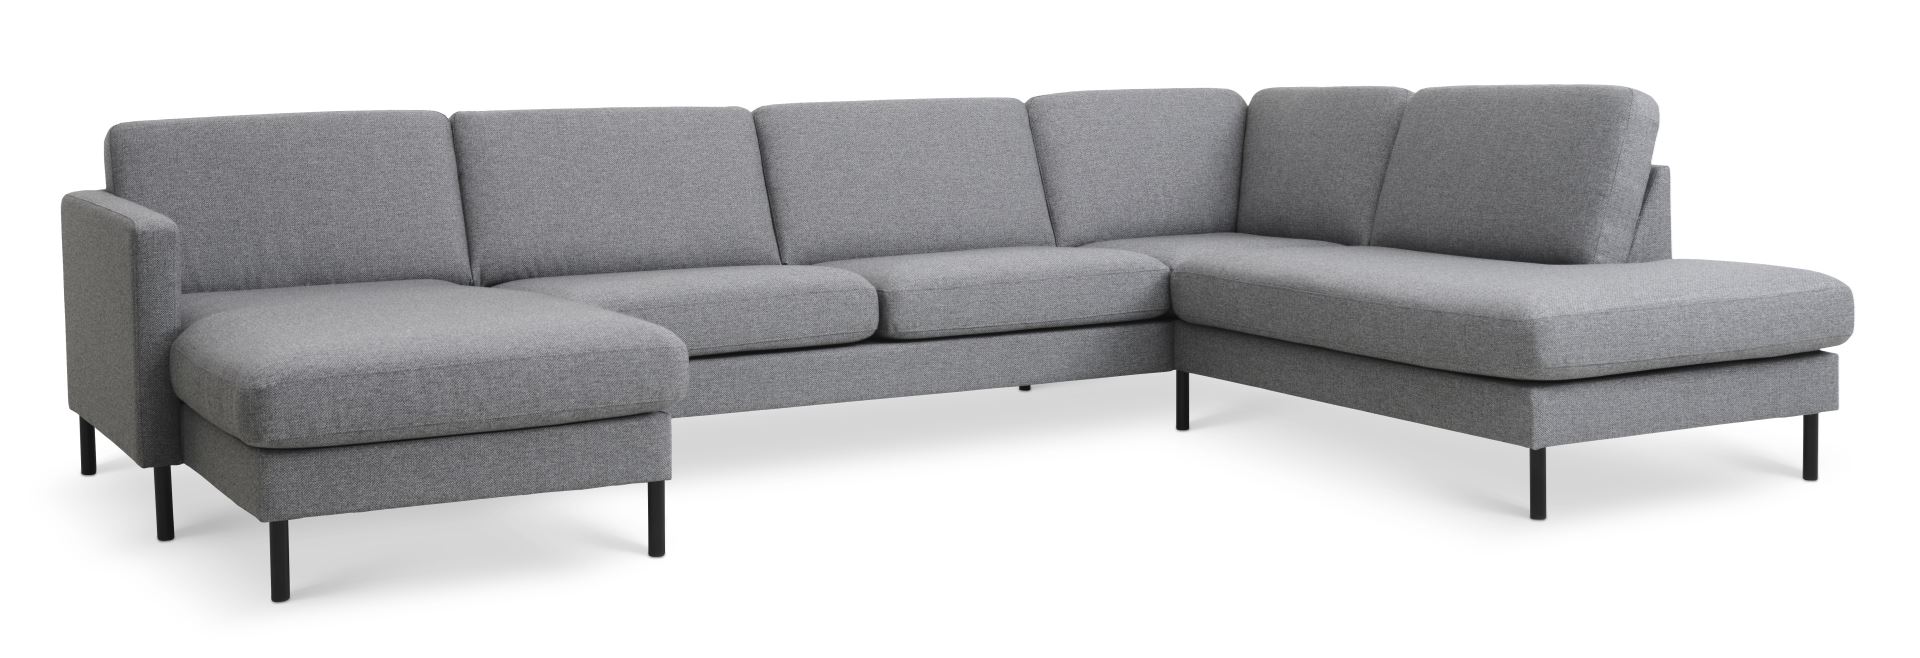 Ask sæt 55 U OE sofa, m. højre chaiselong - lys granitgrå polyester stof og sort metal